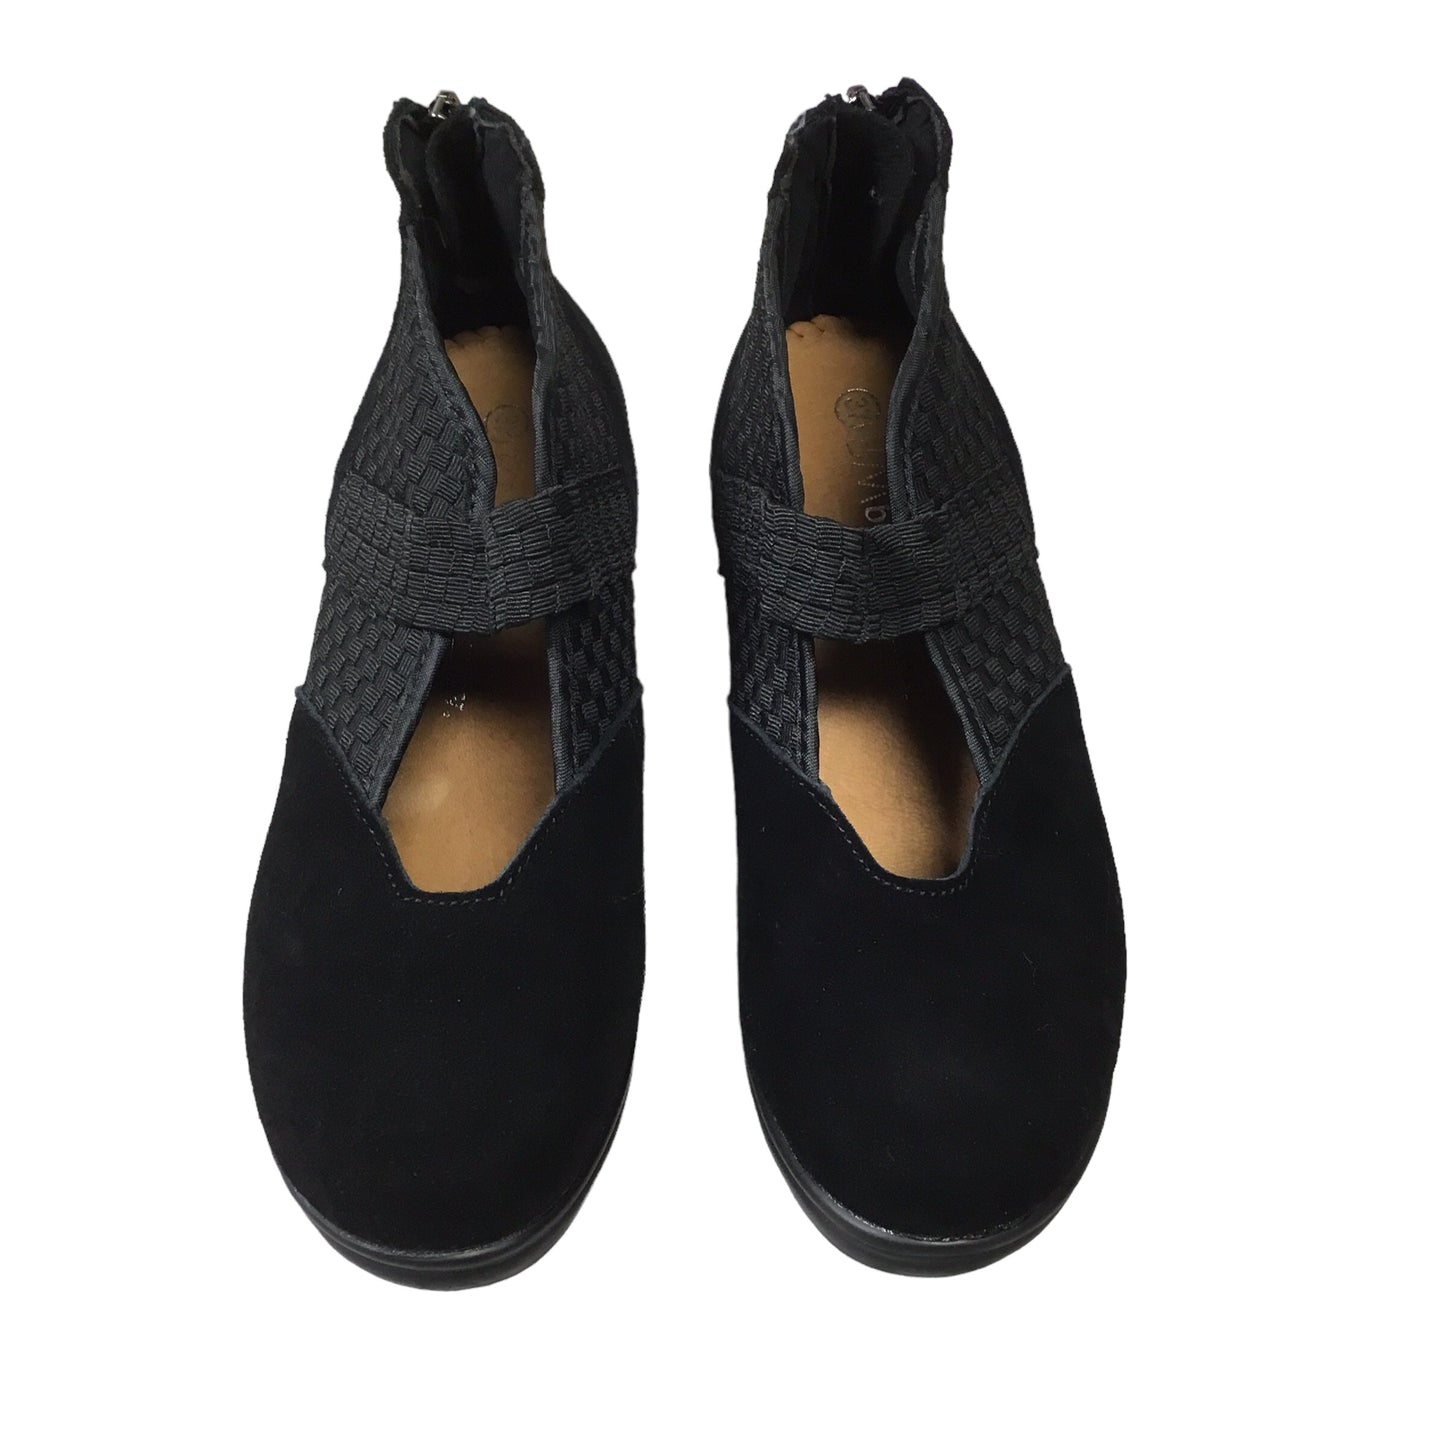 Black Shoes Heels Block Bernie Mev, Size 6.5